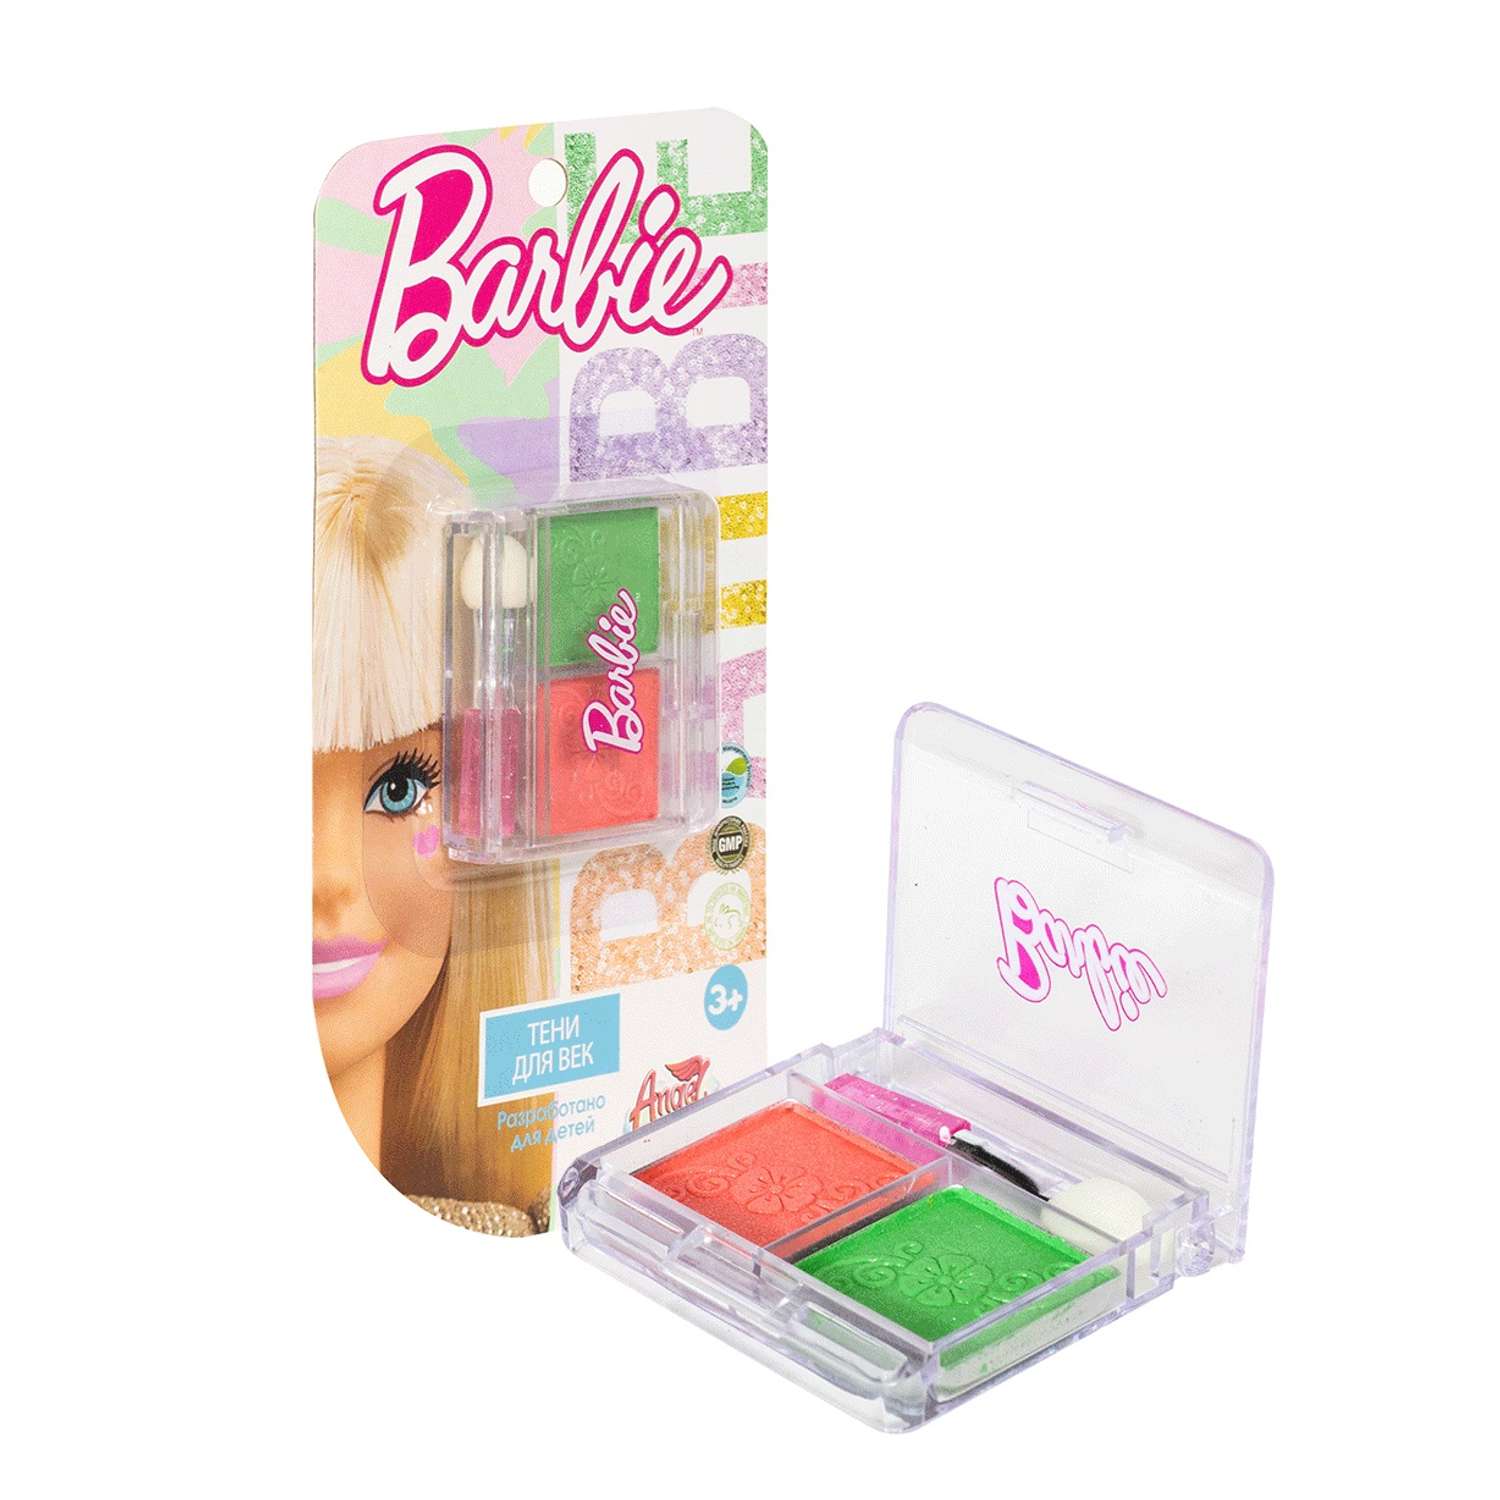 Косметика для девочек Barbie Тени для век Тон теплый - фото 1